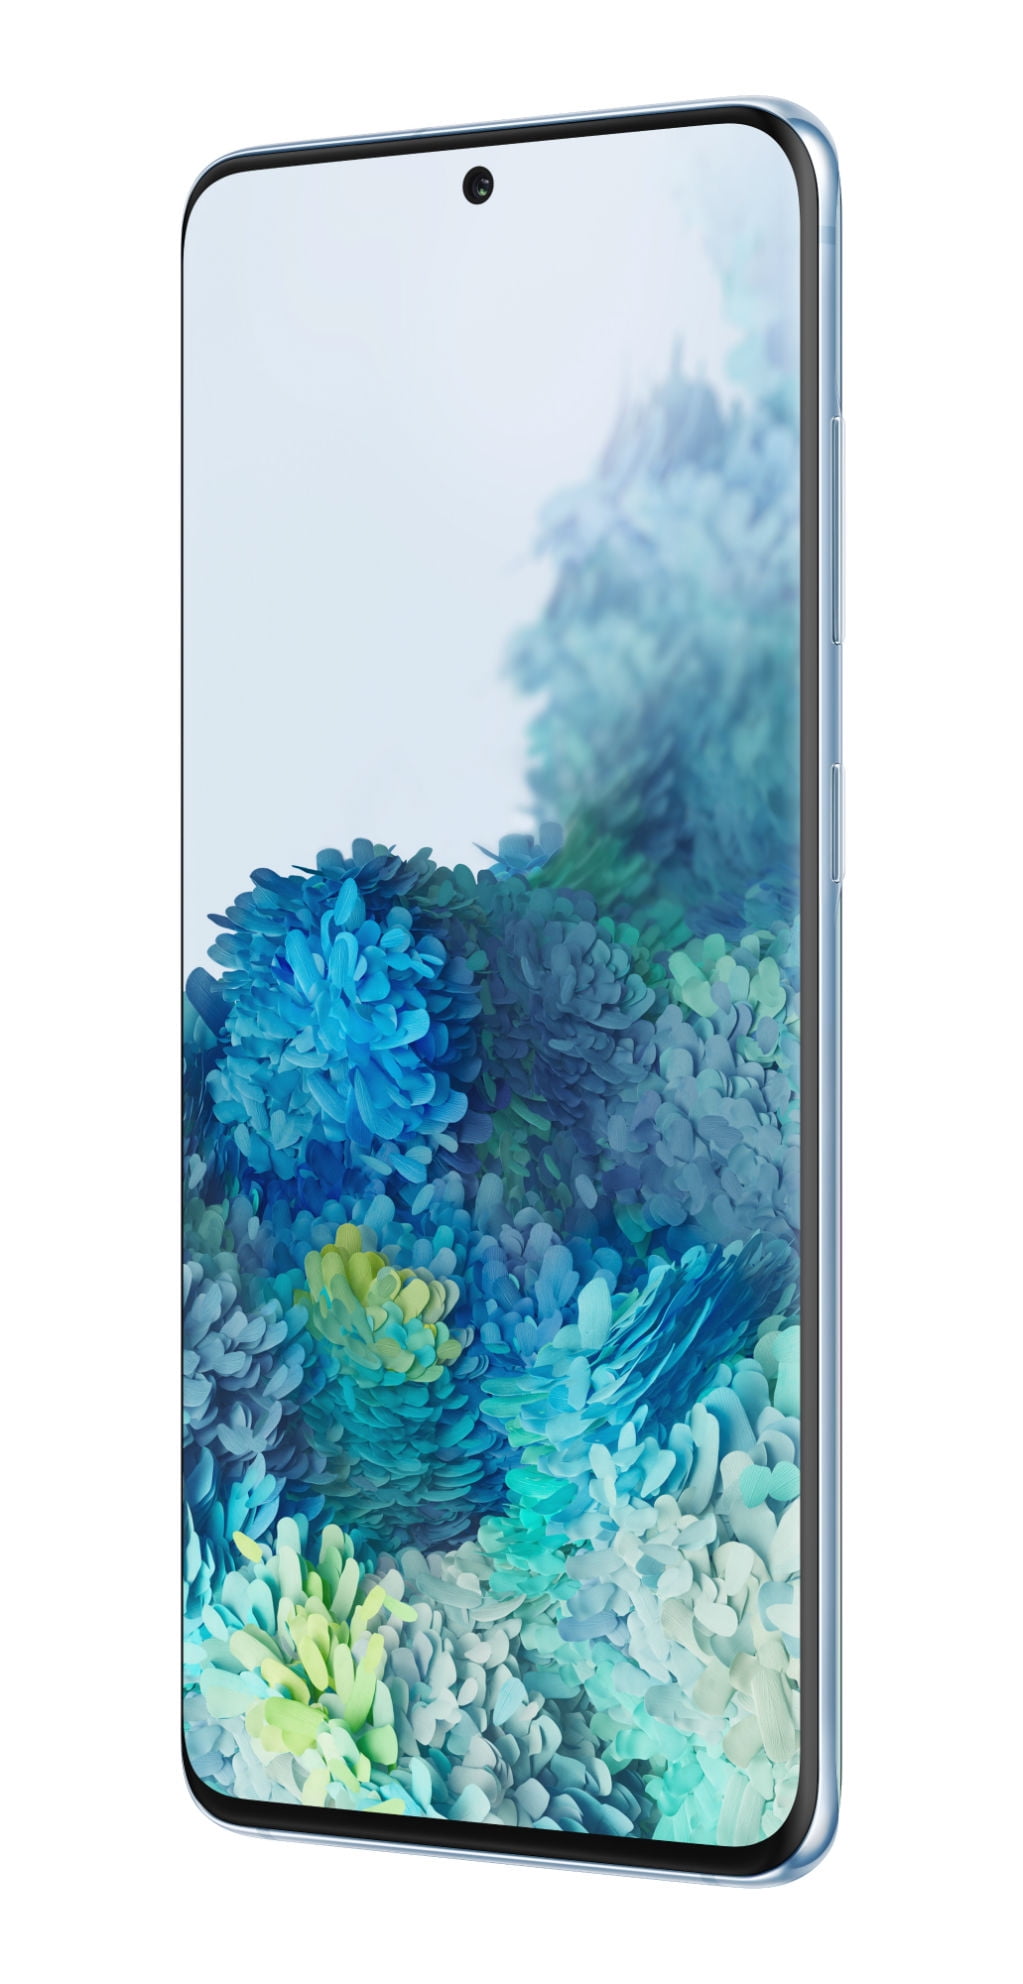 SAMSUNG Unlocked Galaxy S20, 128GB Blue - Smartphone